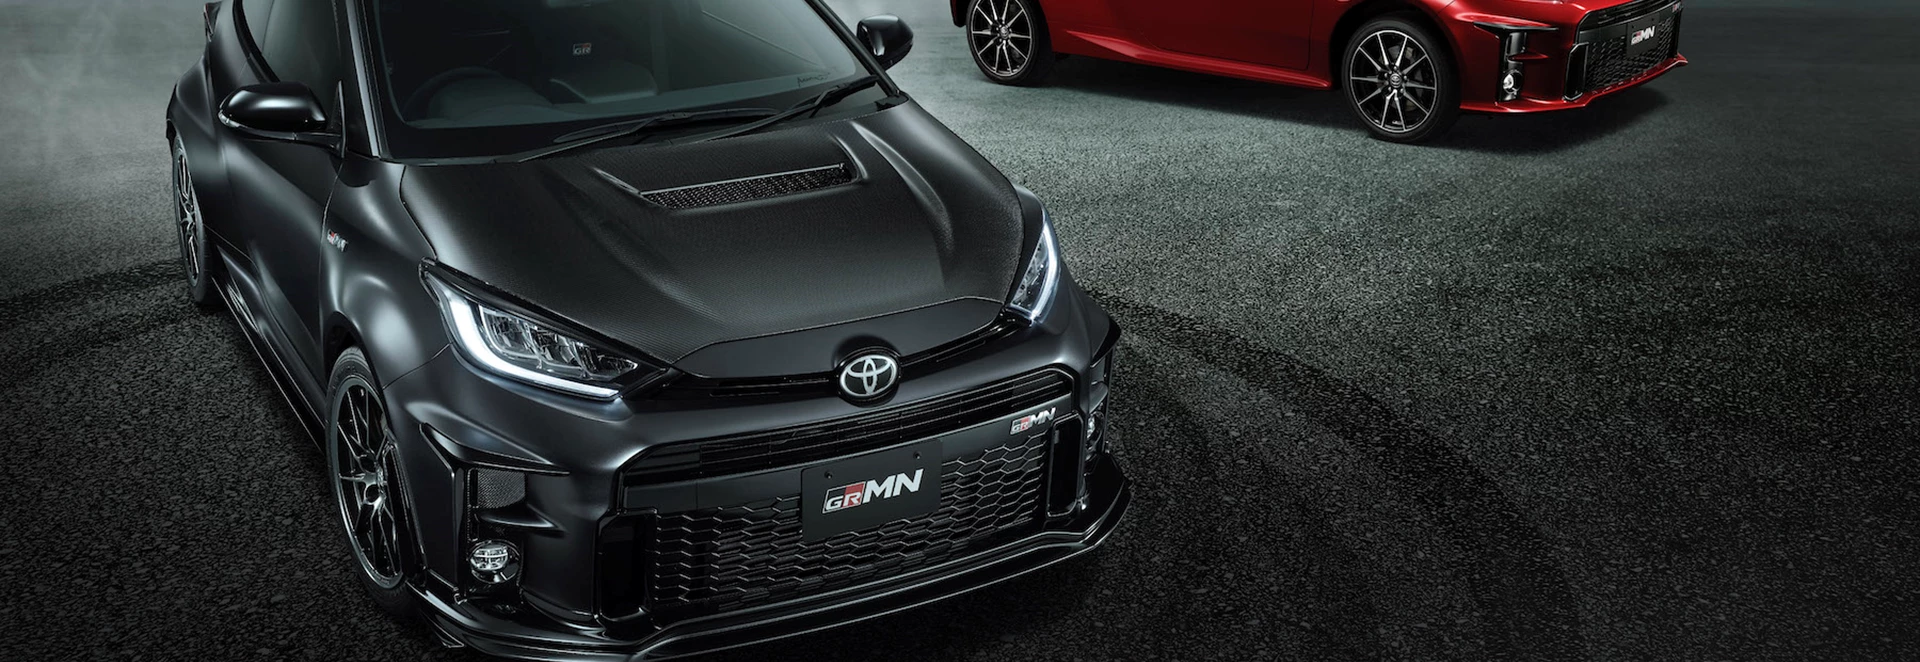 Stripped-back Toyota GRMN Yaris hot hatch revealed 